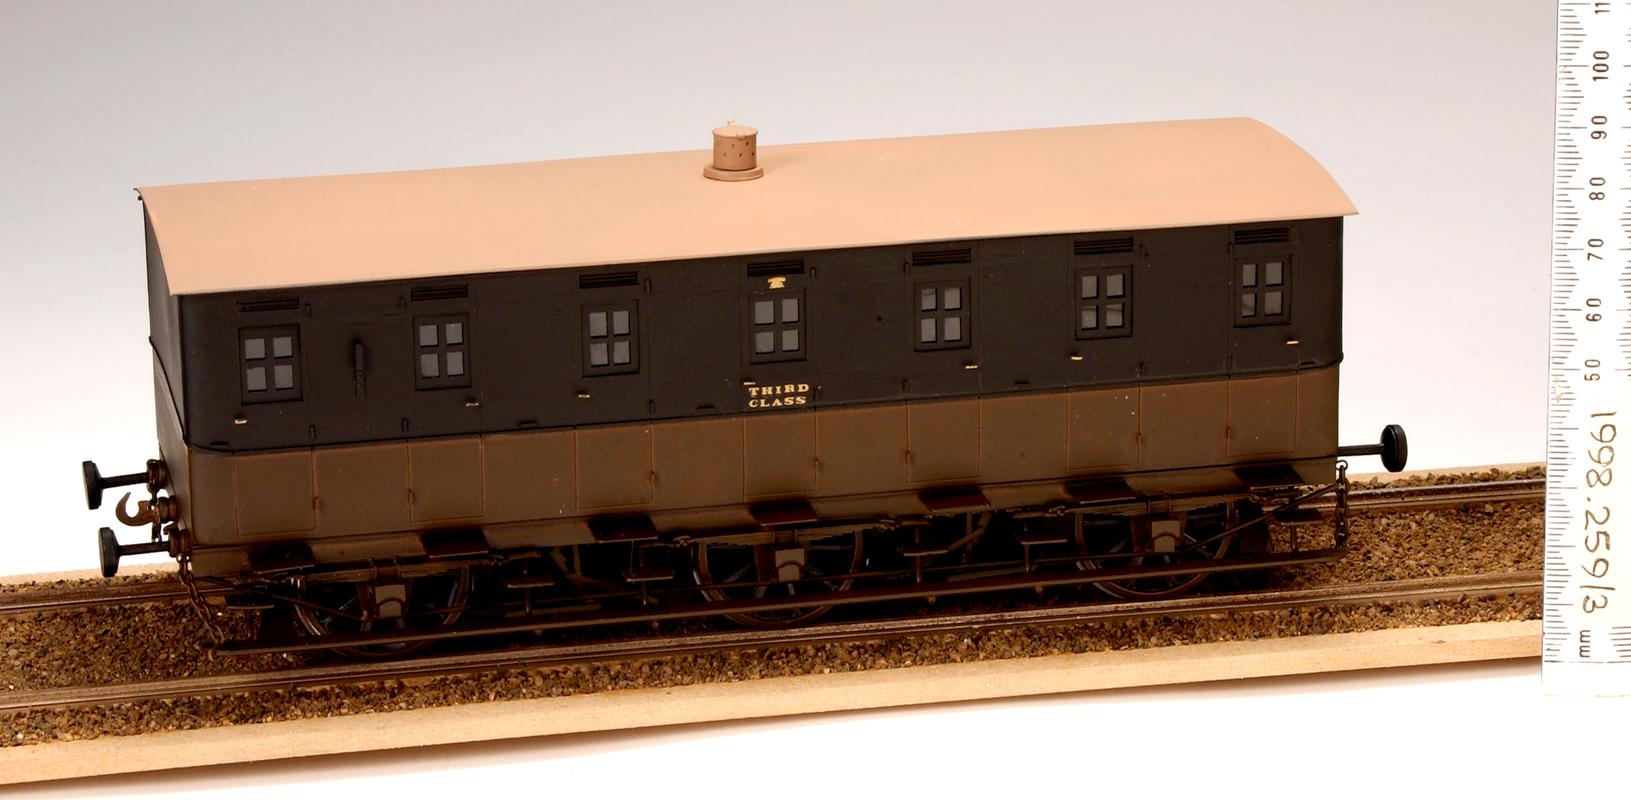 Vale of Neath Railway broad gauge coach model